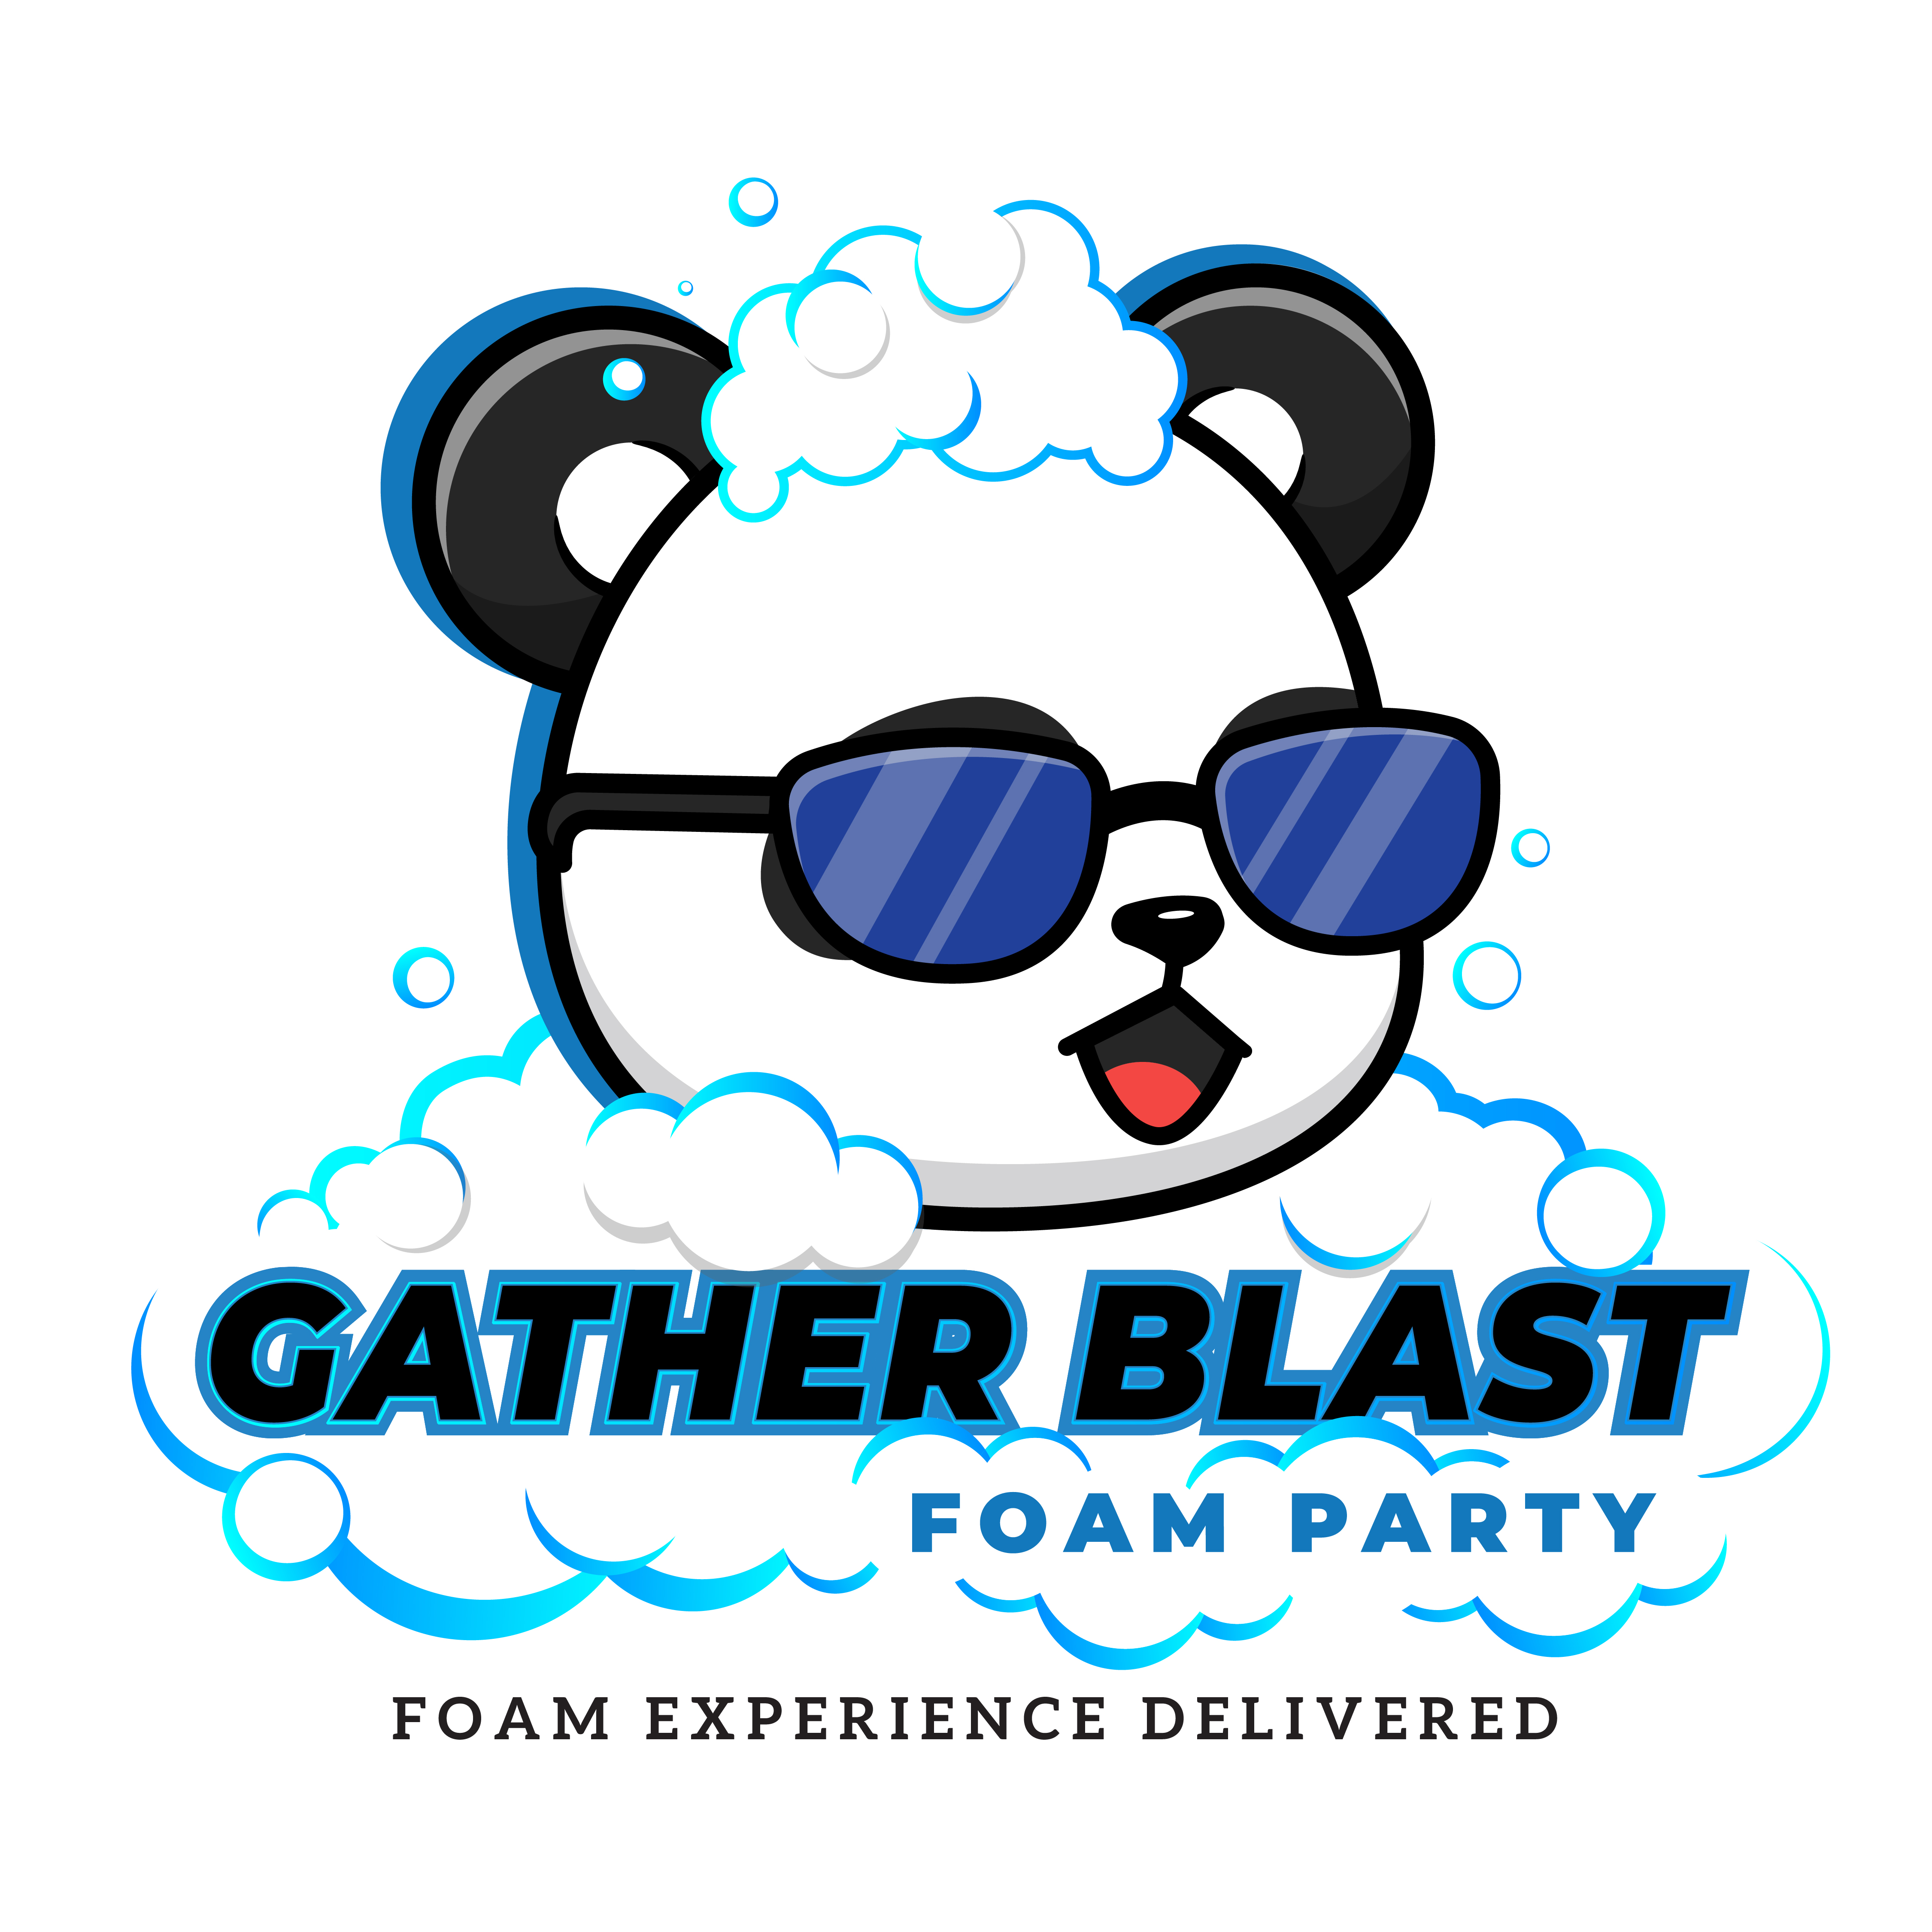 Gather Blast Foam Parties